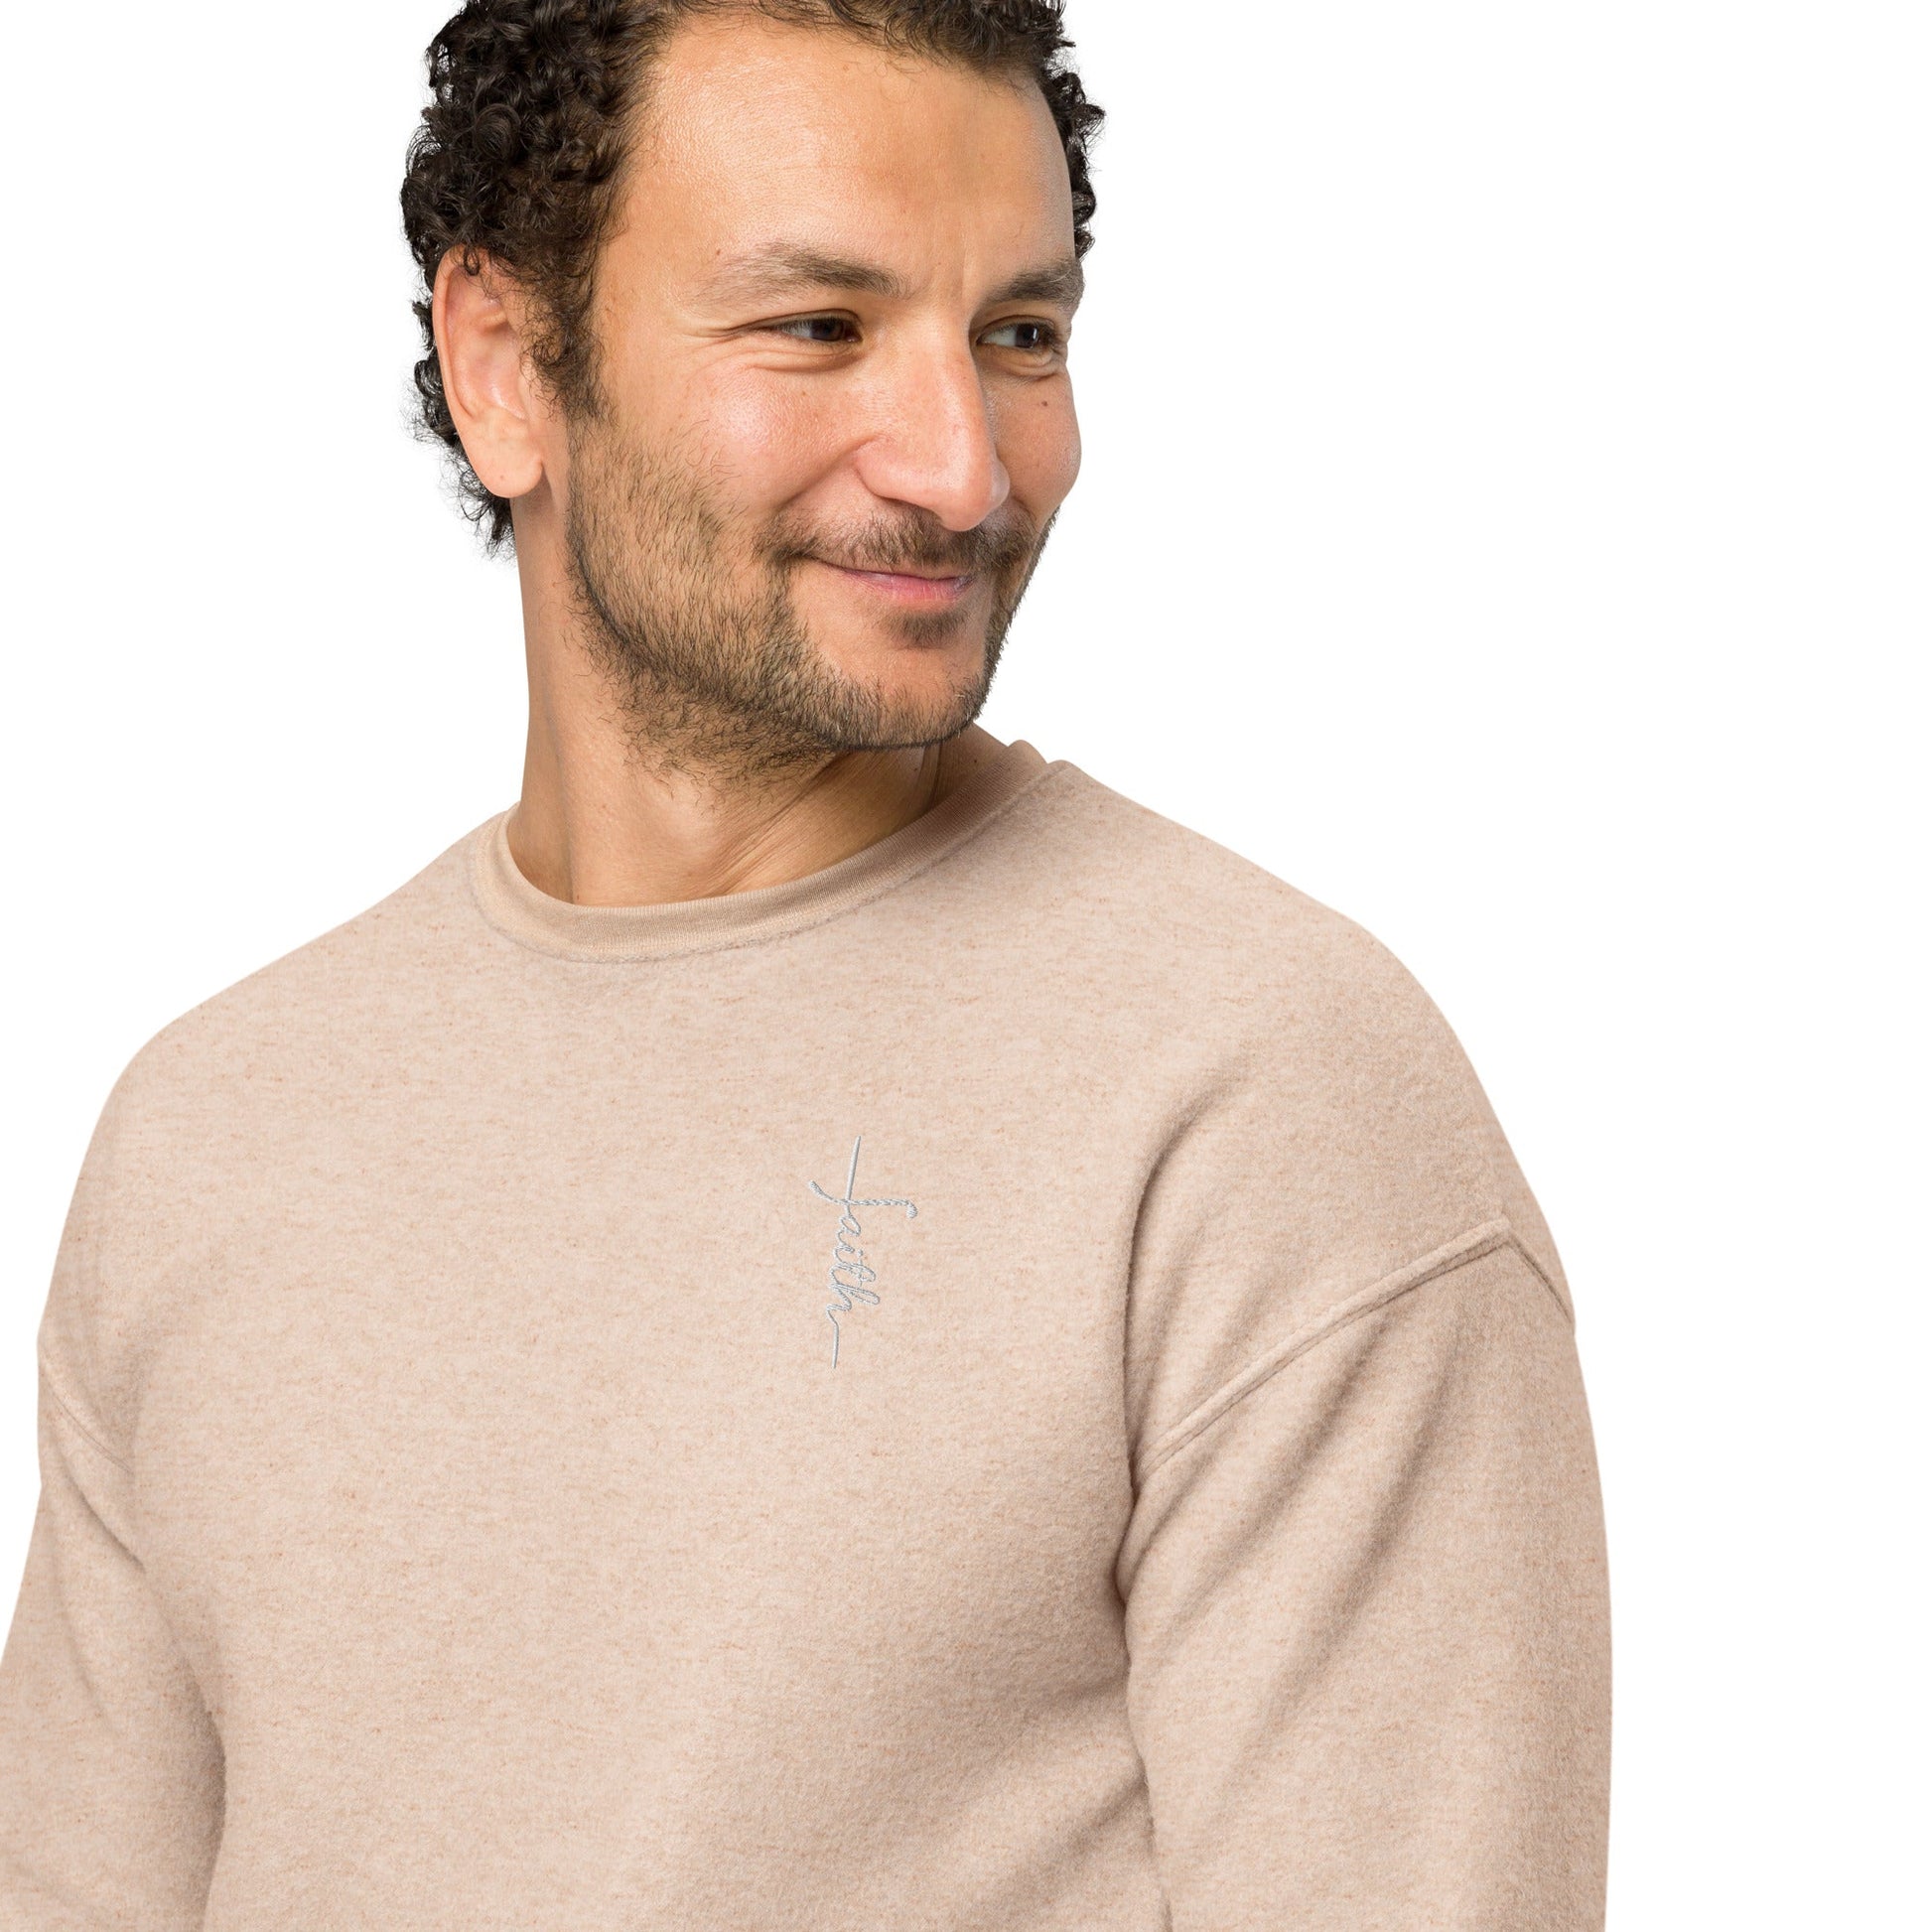 Unisex Fleece Sweatshirt with Embroidered "Faith" Cross - faithbook